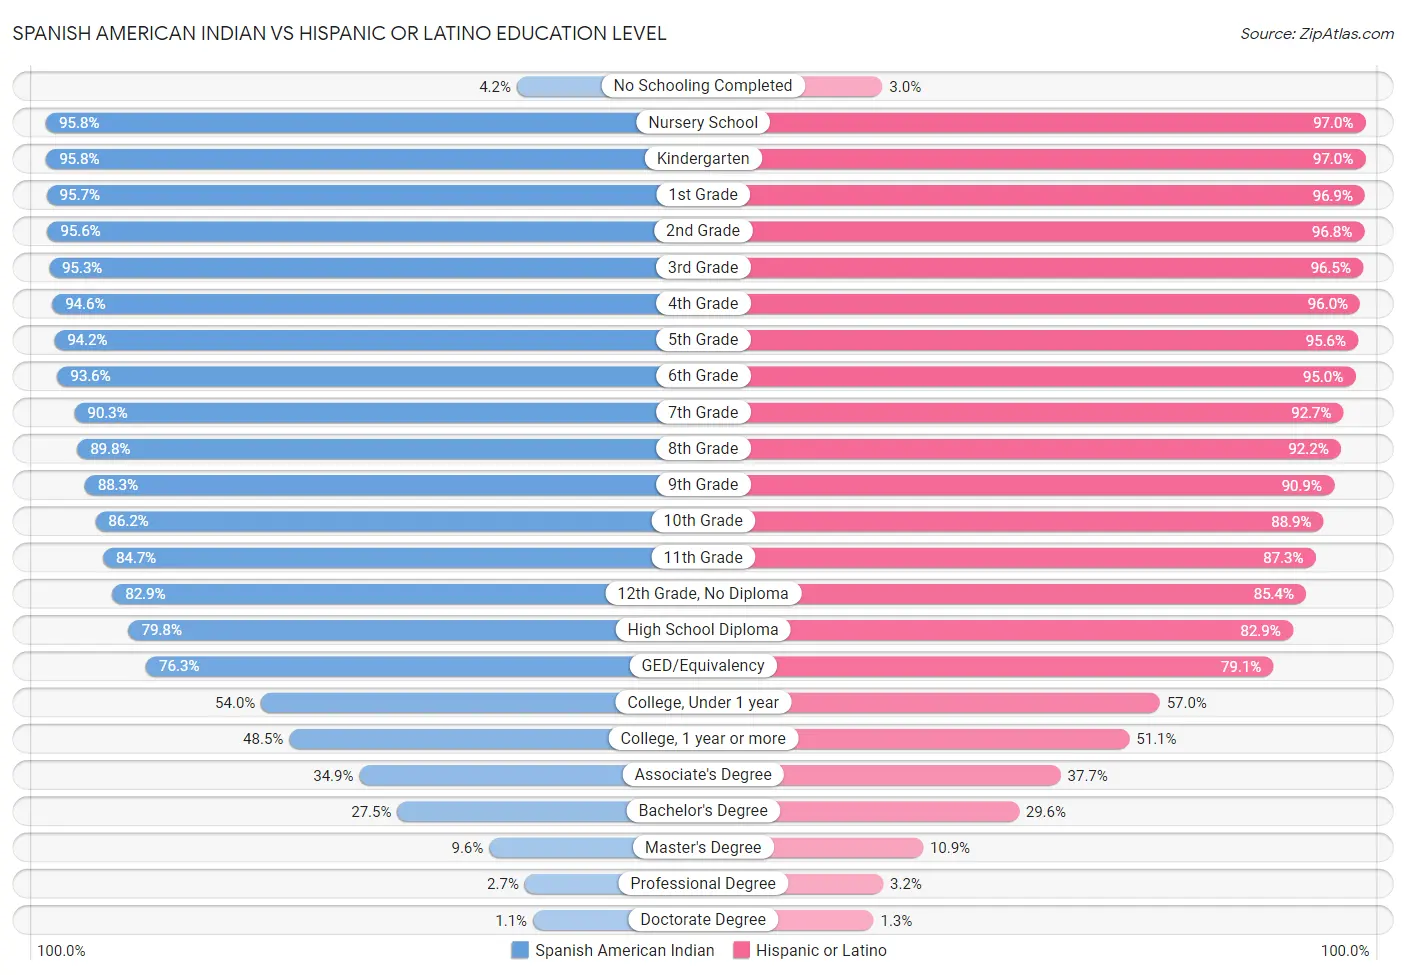 Spanish American Indian vs Hispanic or Latino Education Level